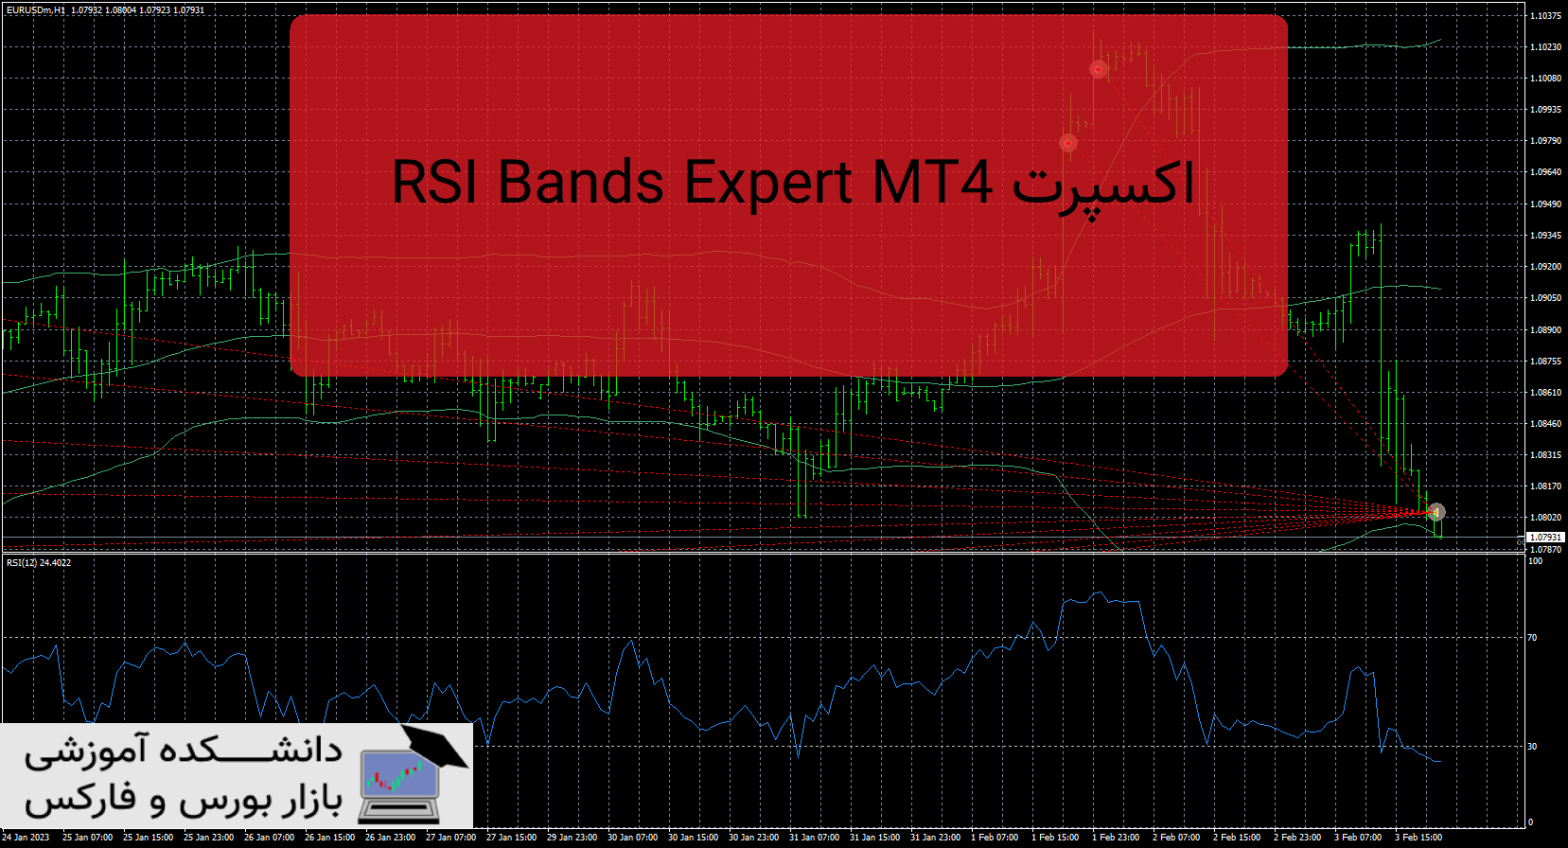 RSI Bands Expert MT4 دانلود و معرفی اکسپرت